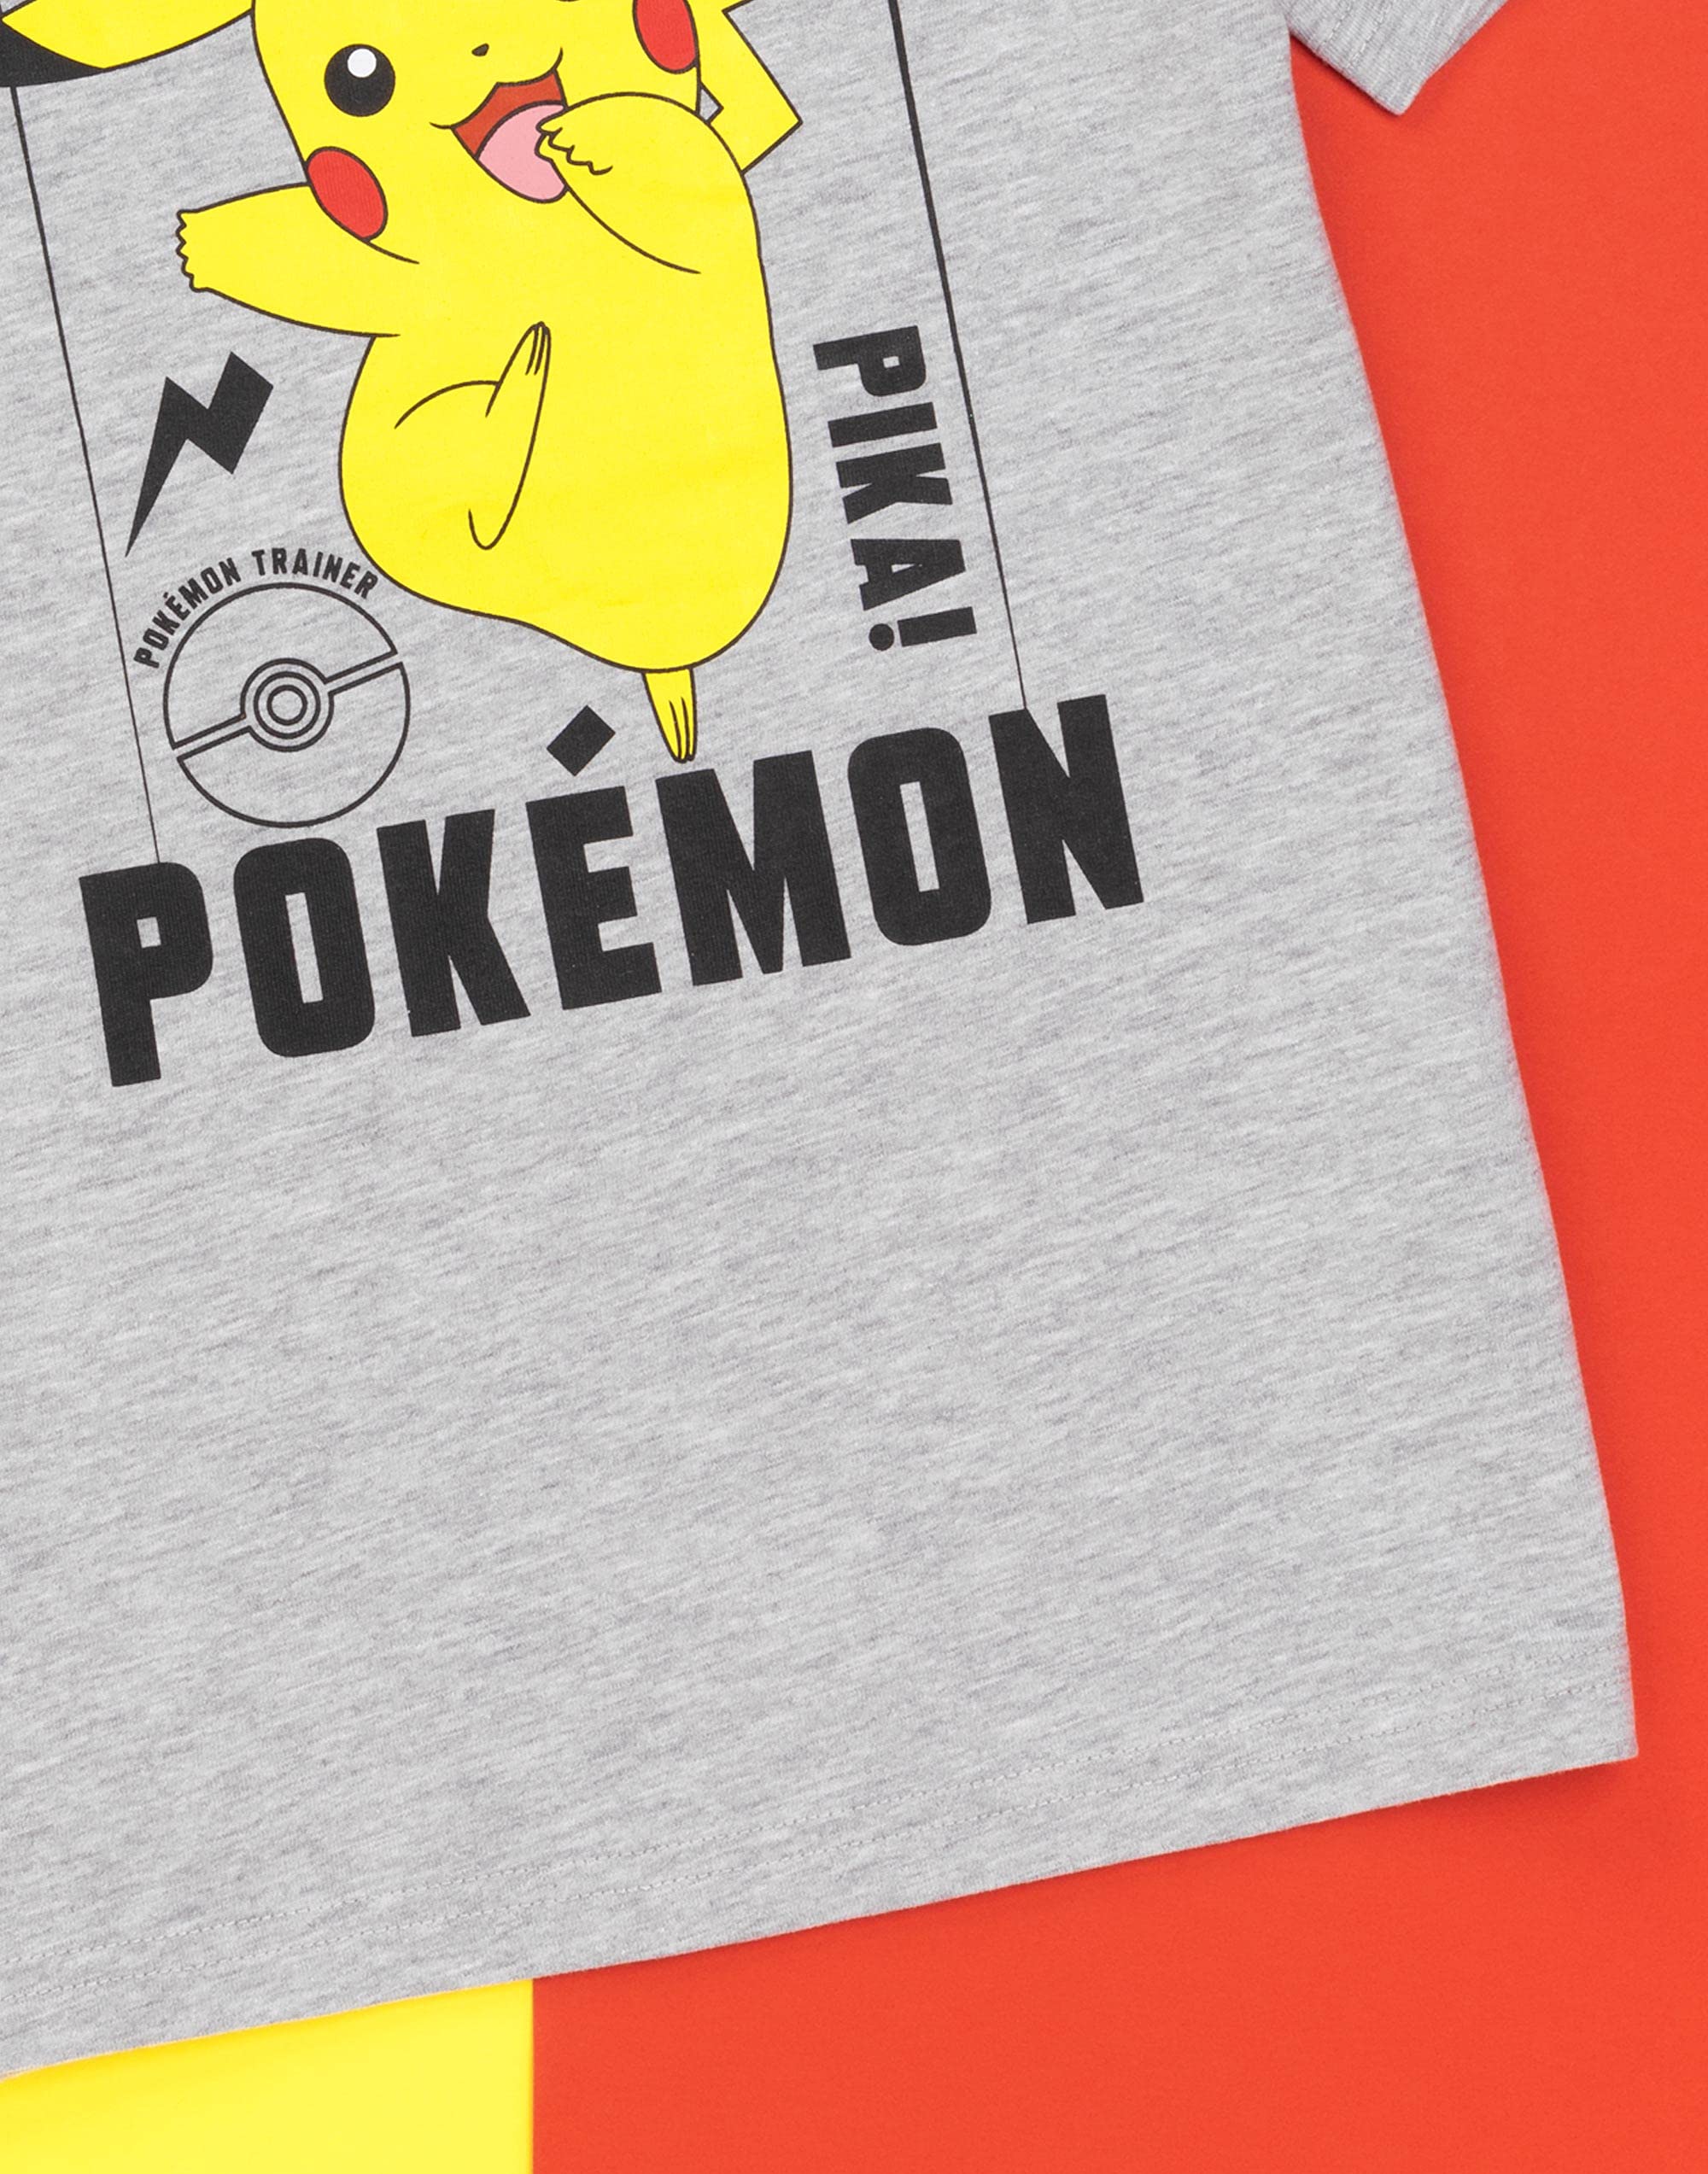 Pokemon T-Shirt Boys Kids Pikachu Character Game Grey Short Sleeve Top